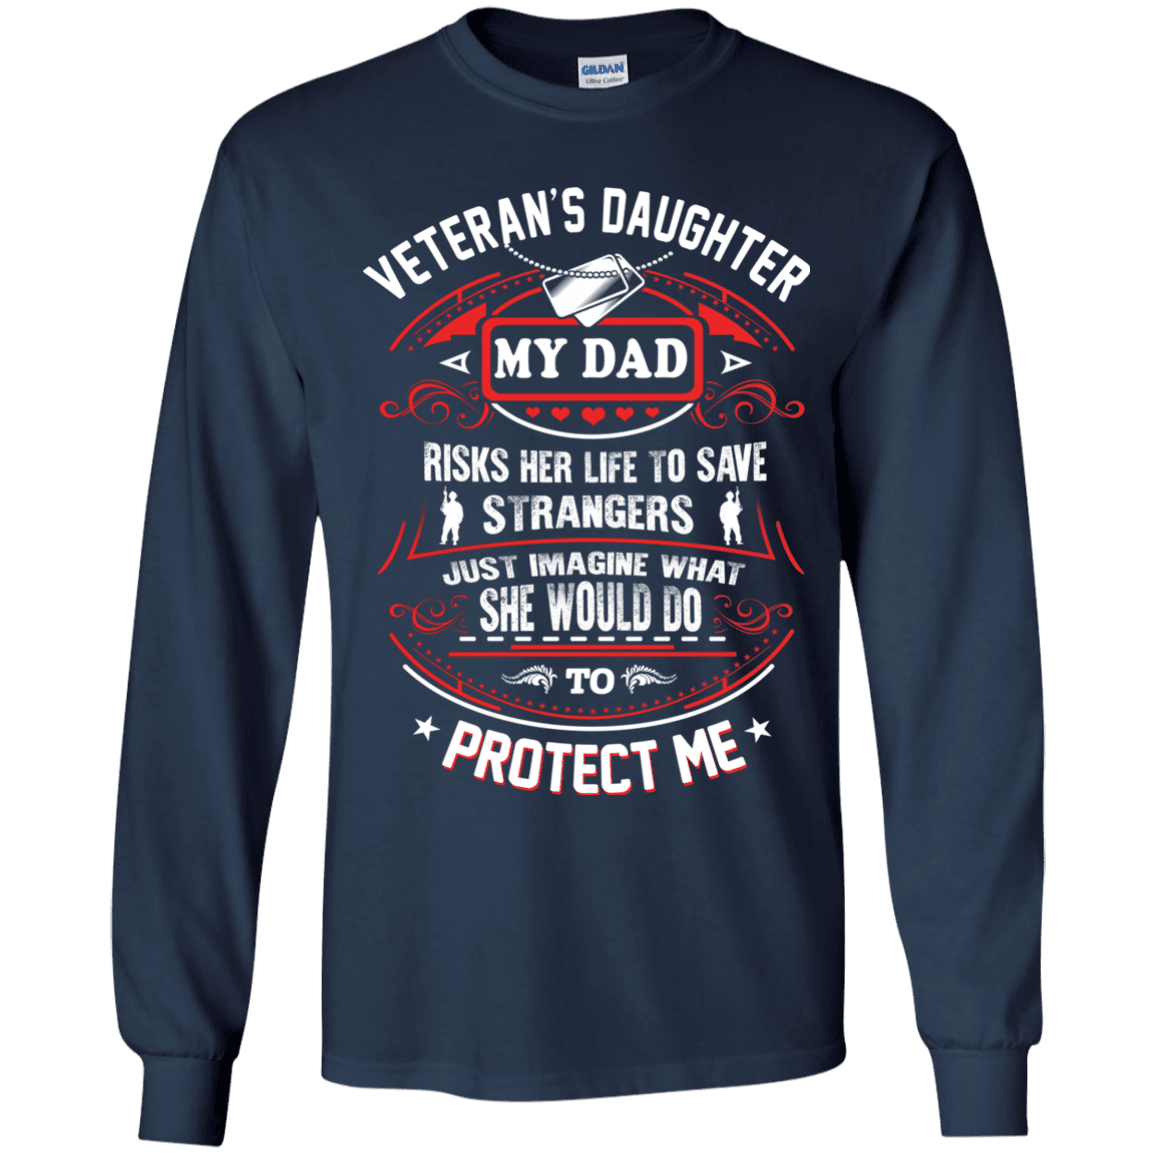 Military T-Shirt "Veteran Daughter My Dad Risk His Life To Protect Me"-TShirt-General-Veterans Nation